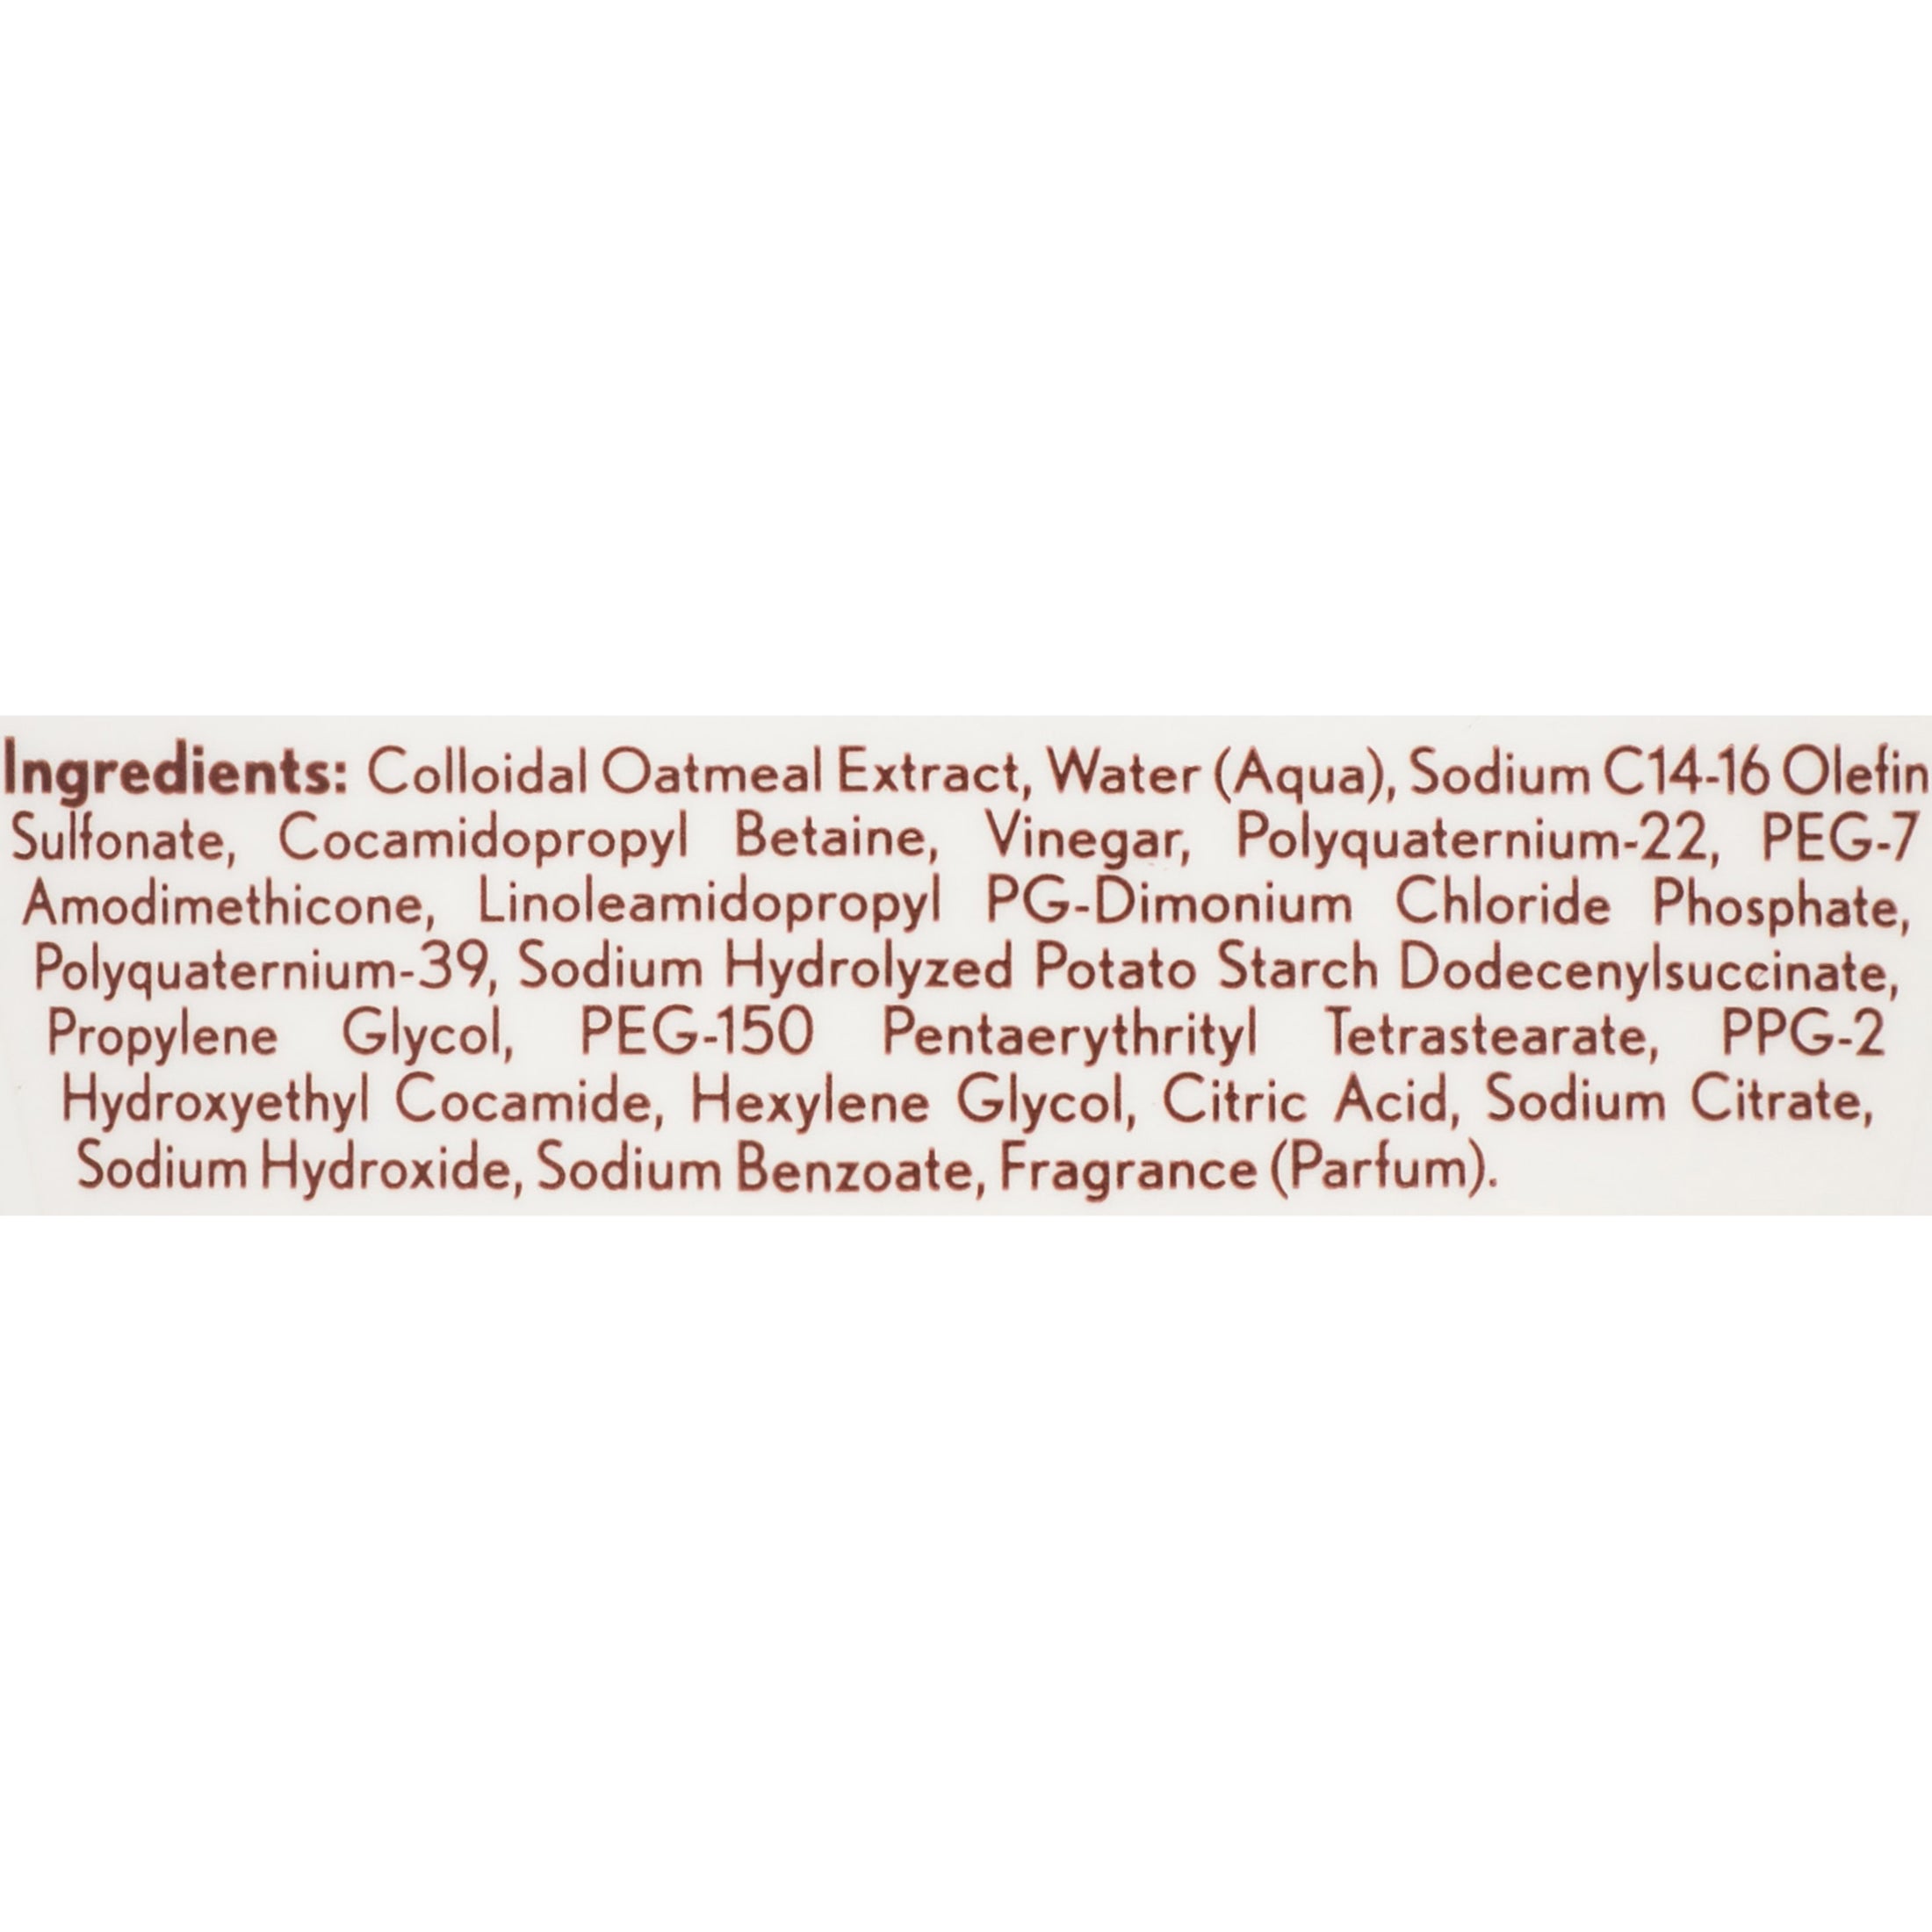 Aveeno Apple Cider Vinegar Clarifying Shampoo, Shine Enhancing, 12 fl oz | MTTS364